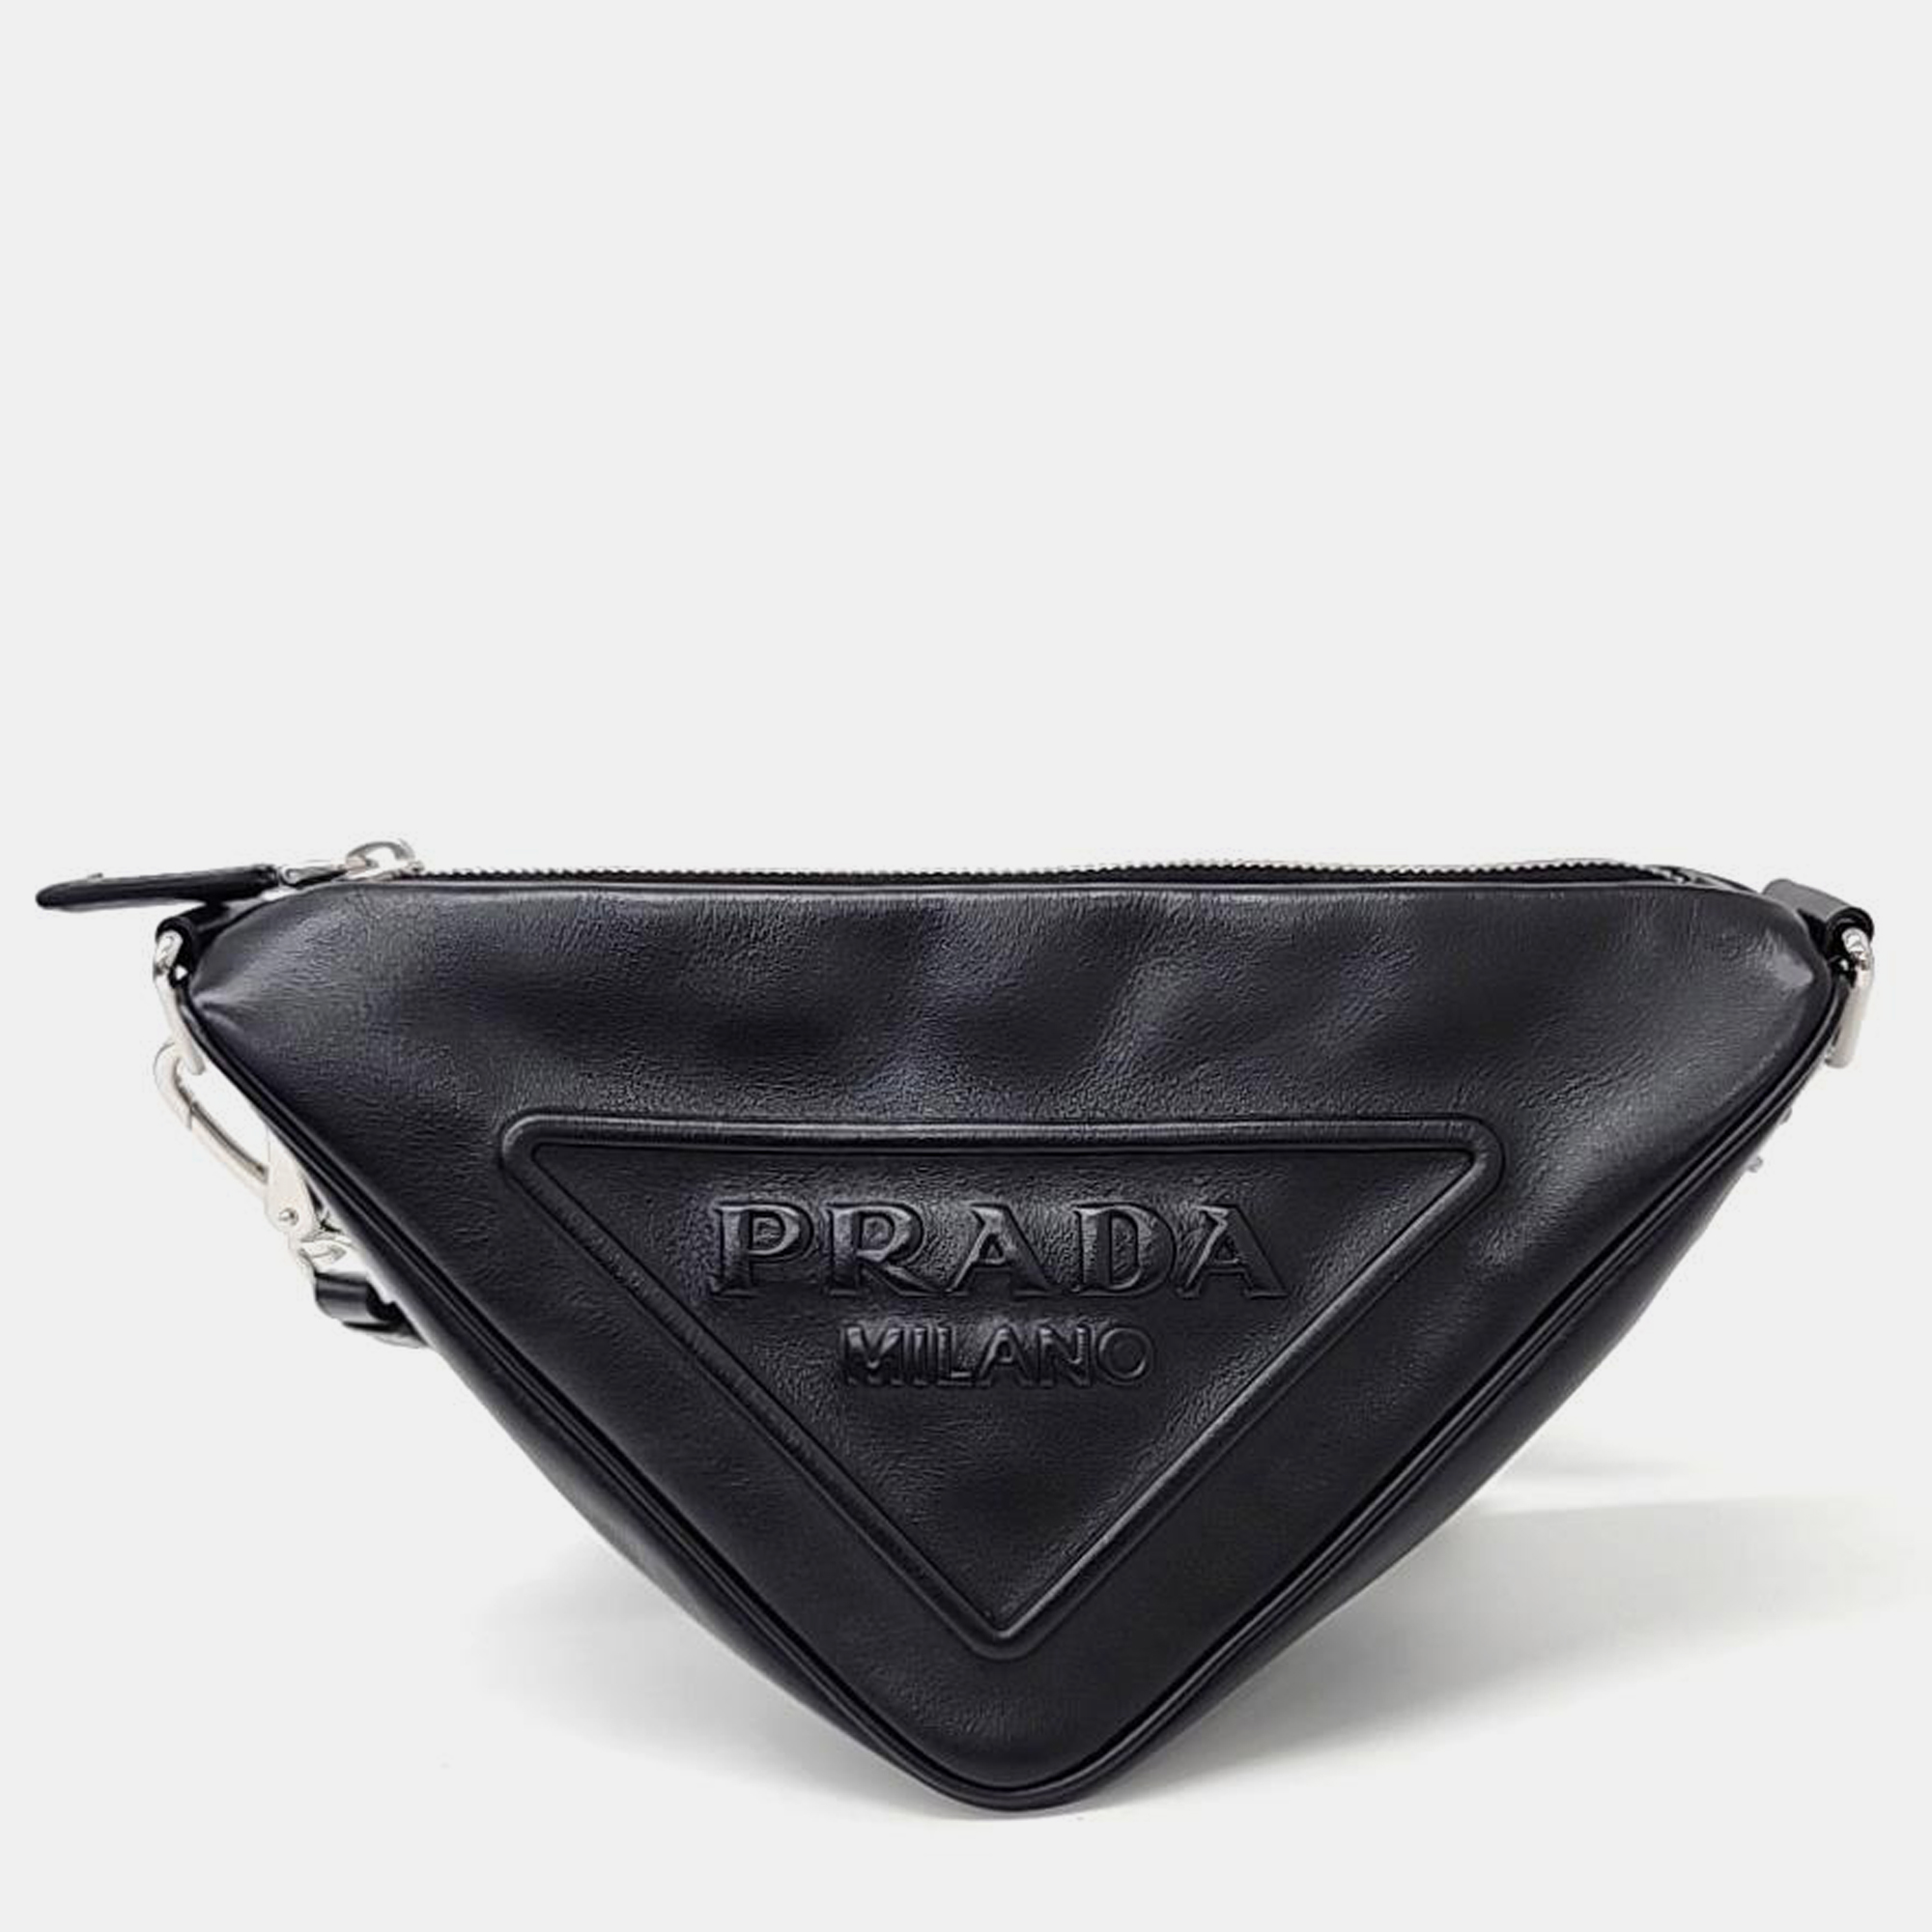 Prada grace luxe triangle shoulder bag (1bh190)